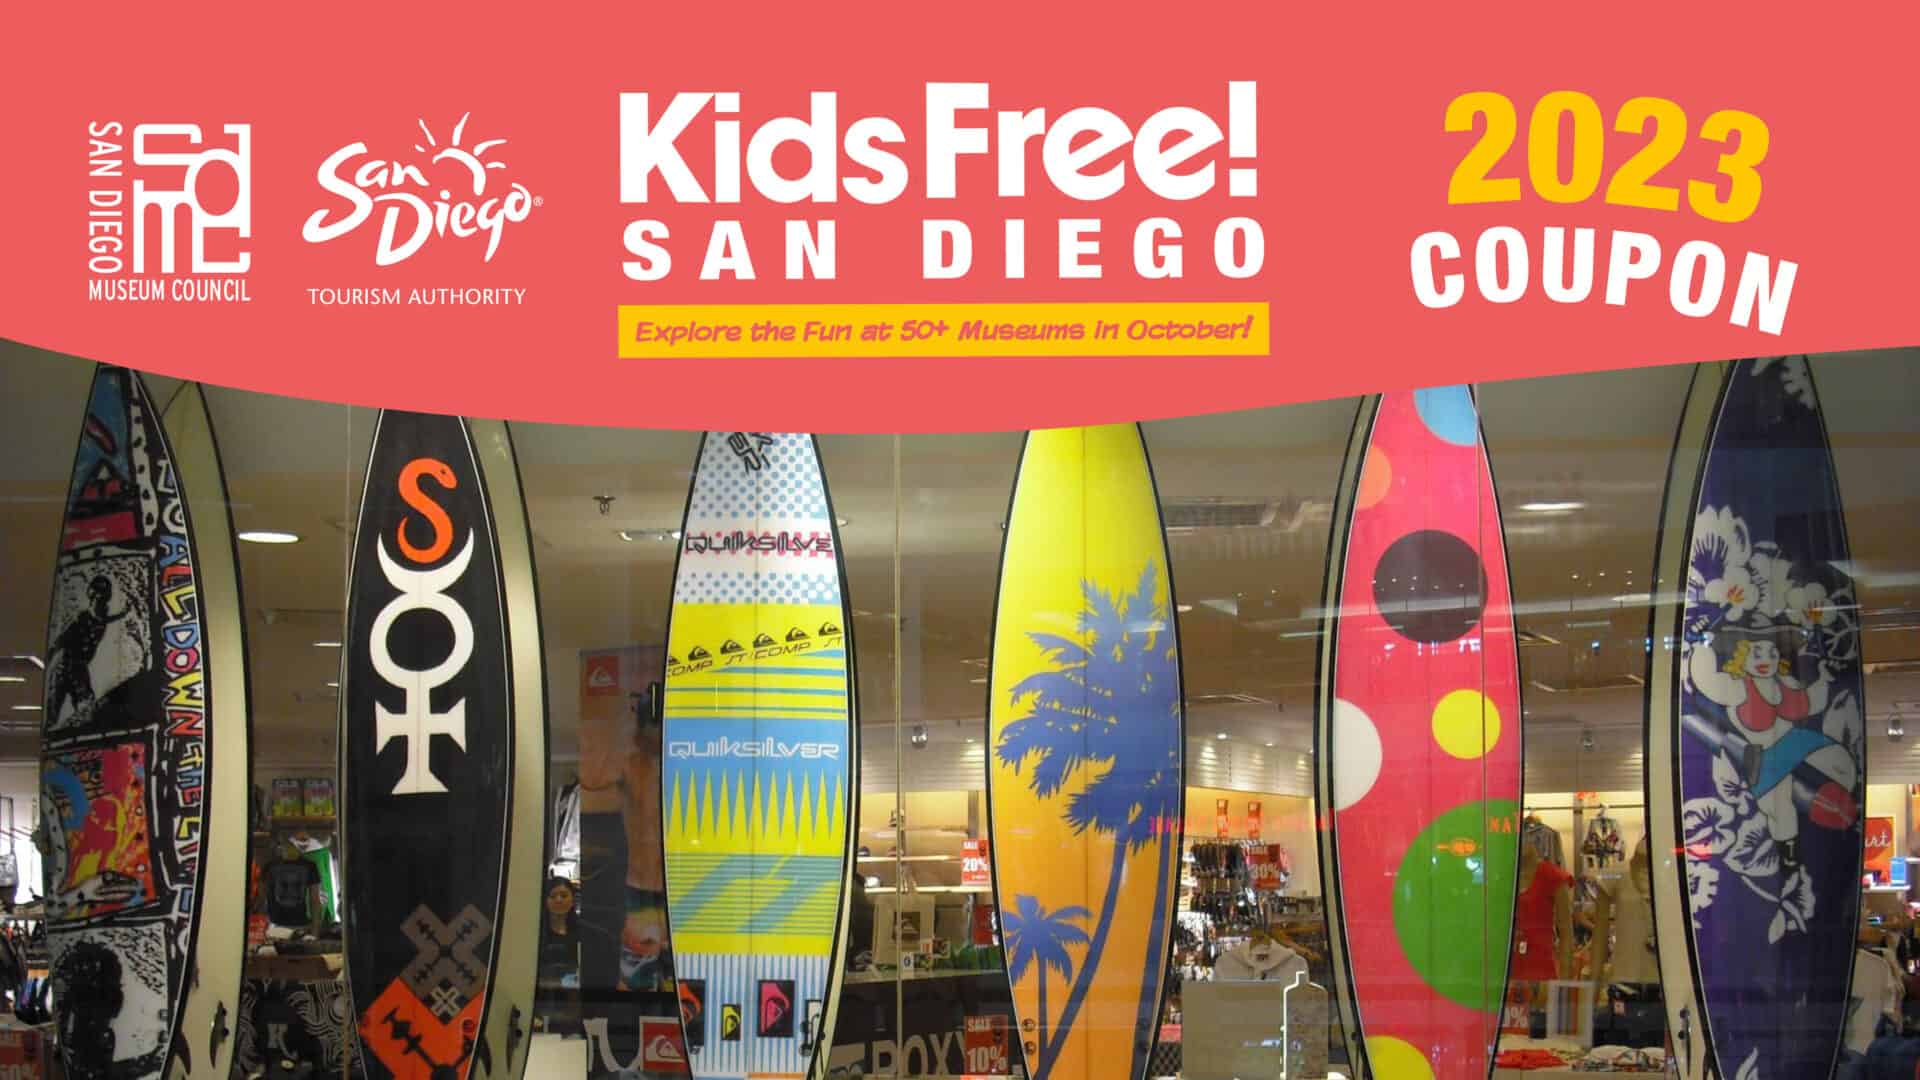 California Surf Museum Kids Free 2023 Coupon San Diego Museum Council